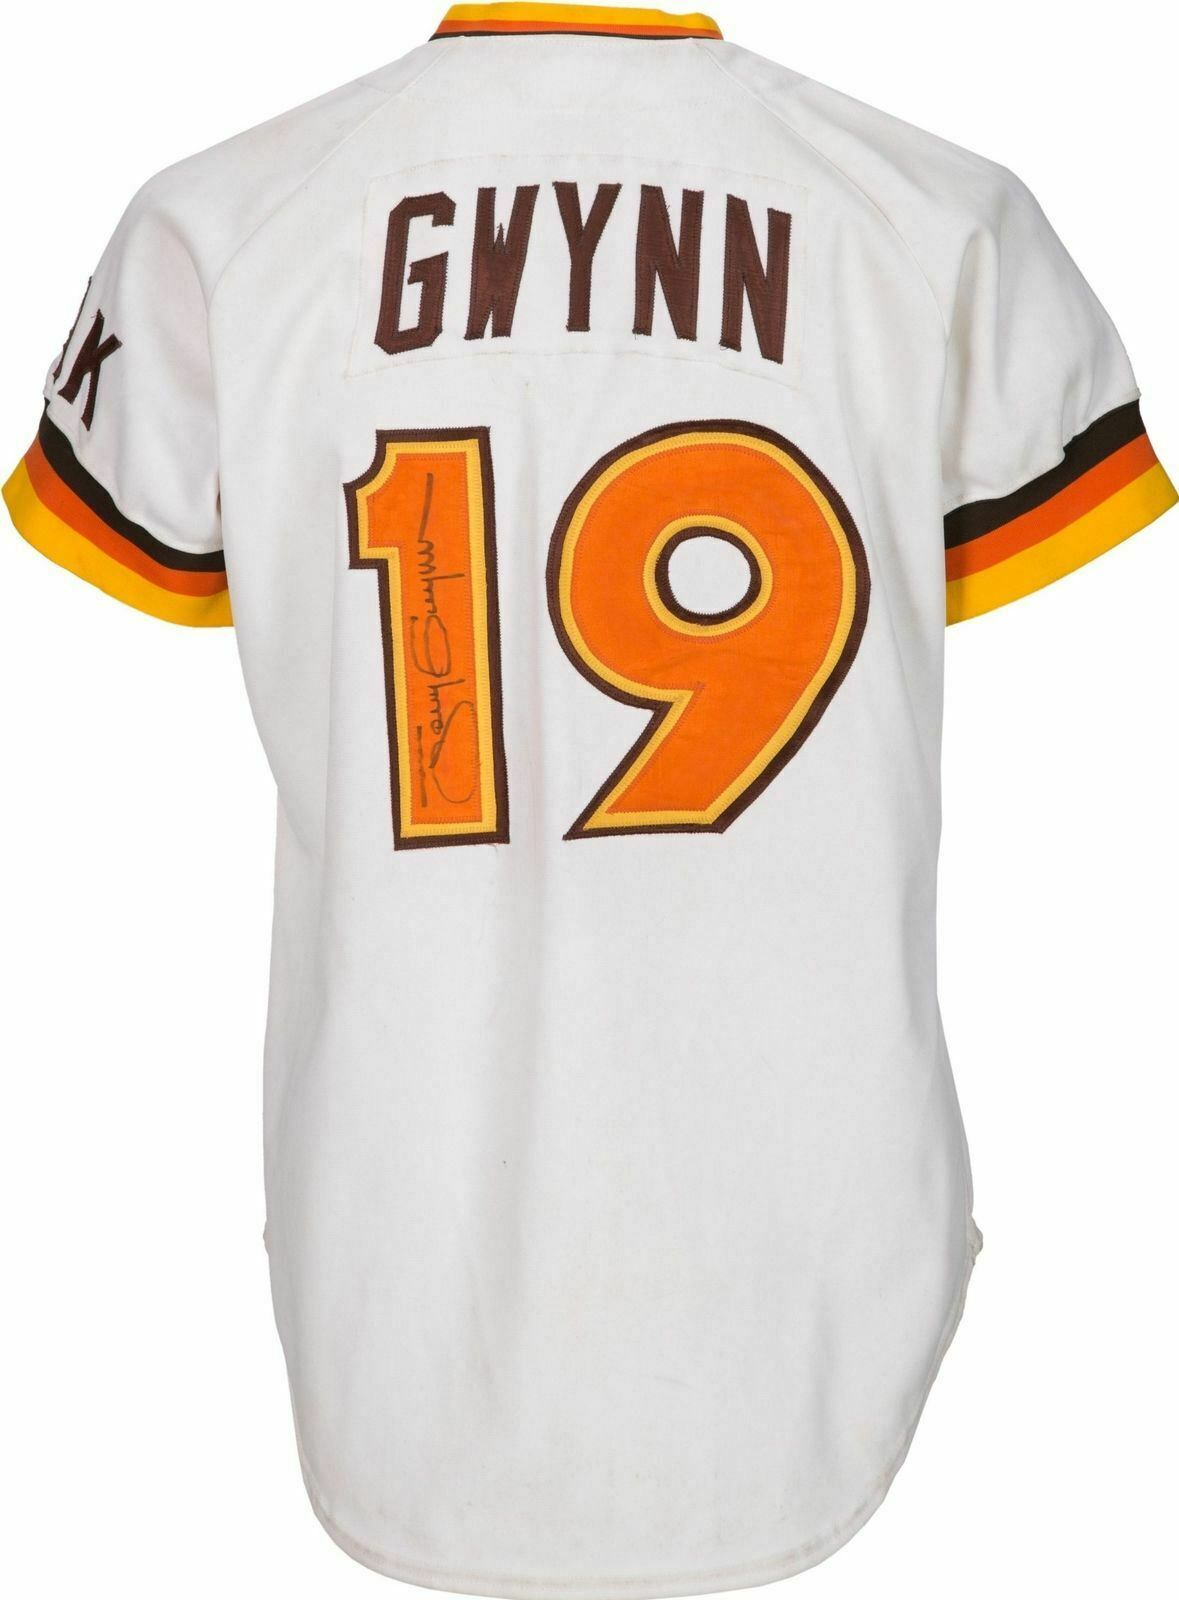 1997 Tony Gwynn Hit #2753 Game Worn San Diego Padres Jersey., Lot  #82382